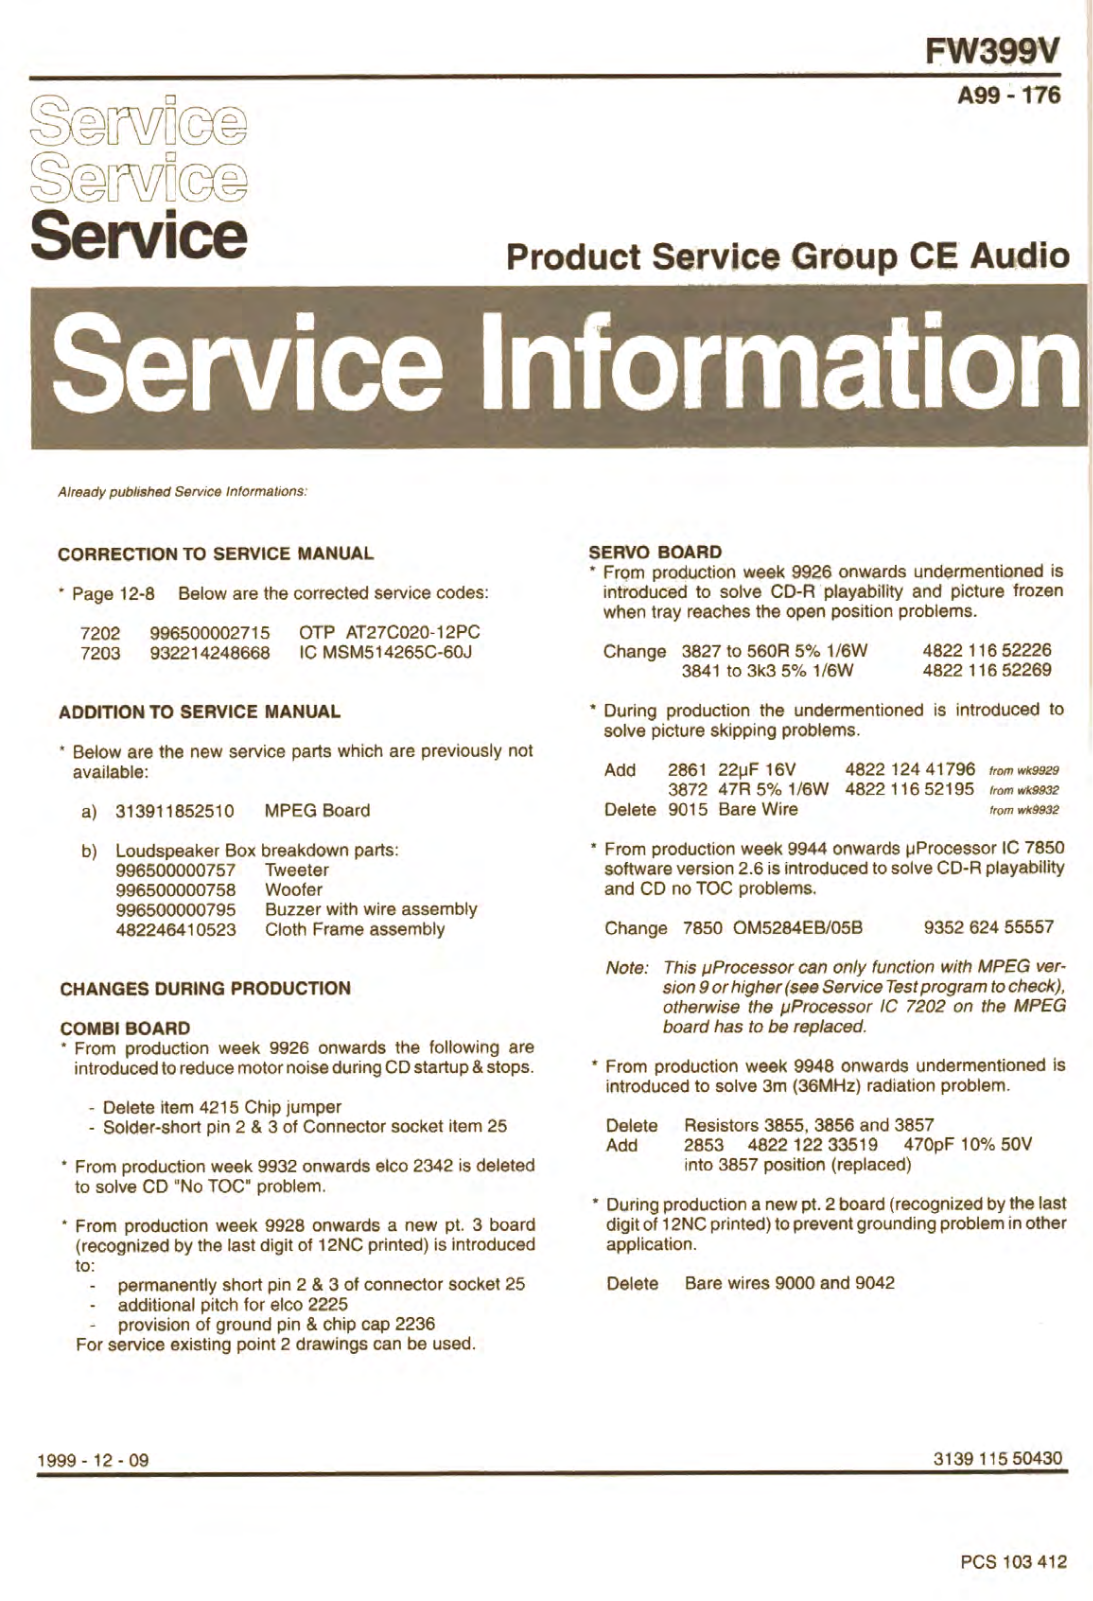 Philips FW-399-V Service Manual